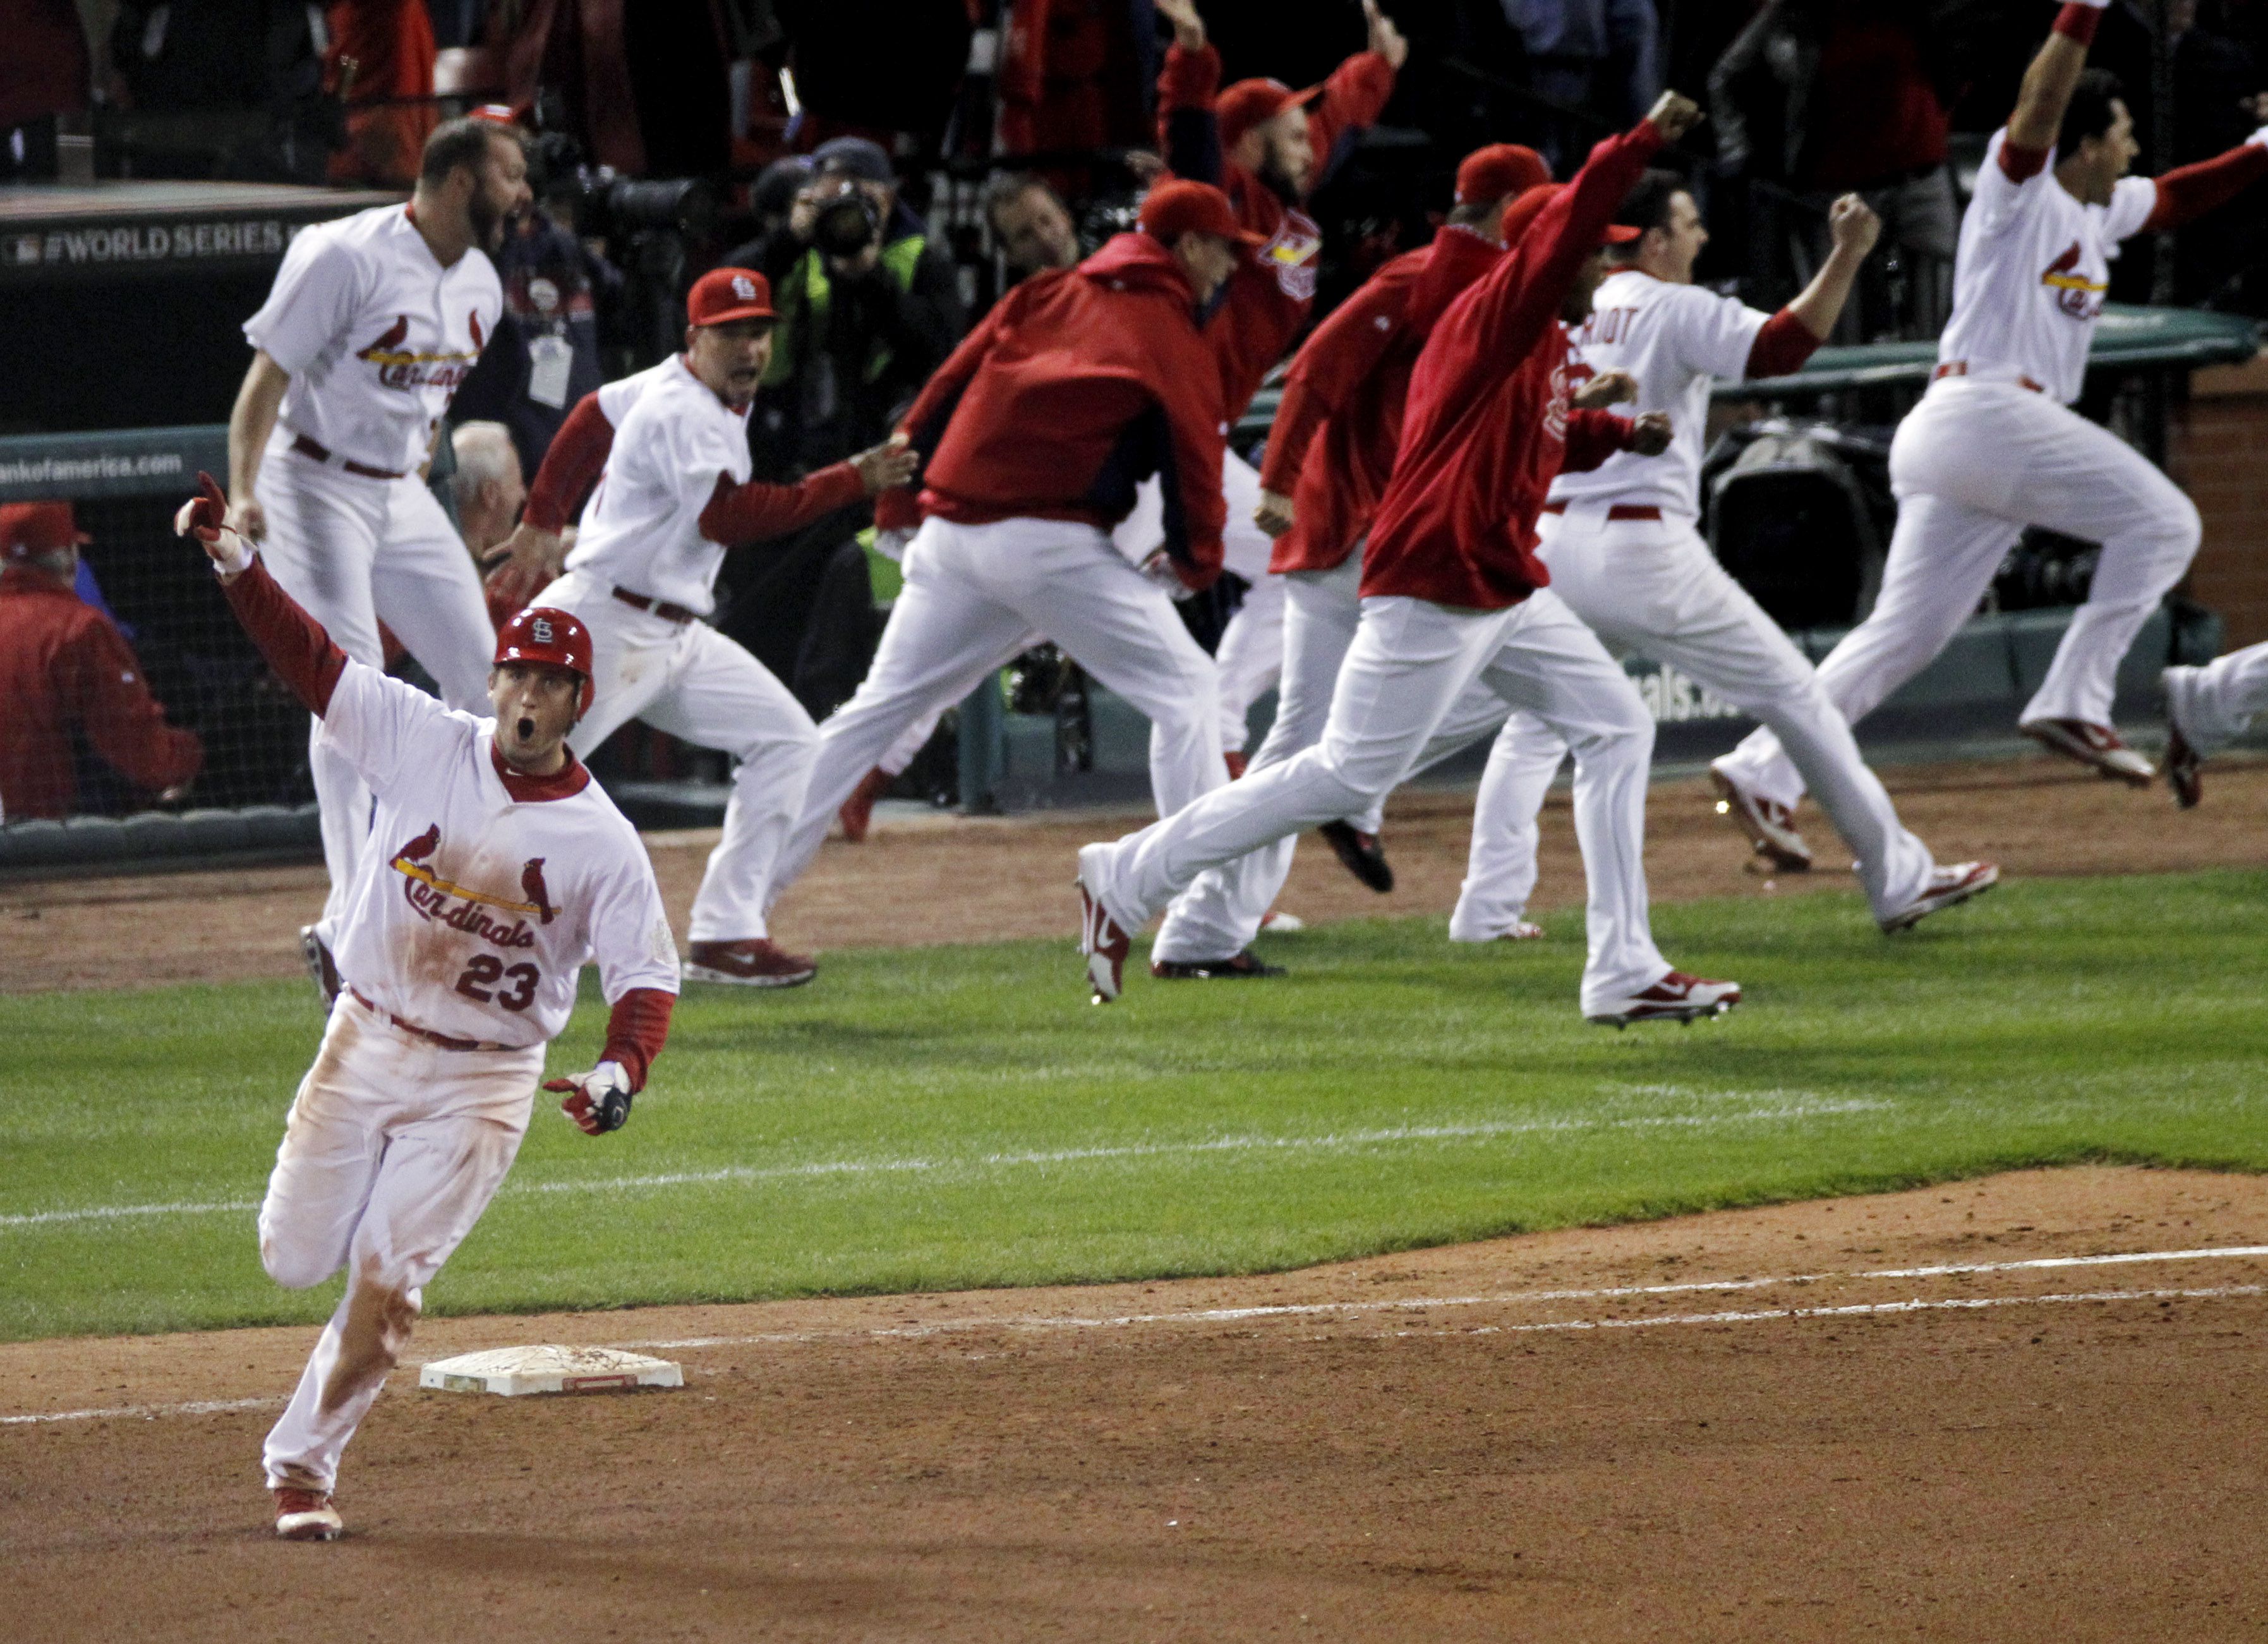 Baseball: Comeback Cardinals beat Rangers to win World Series